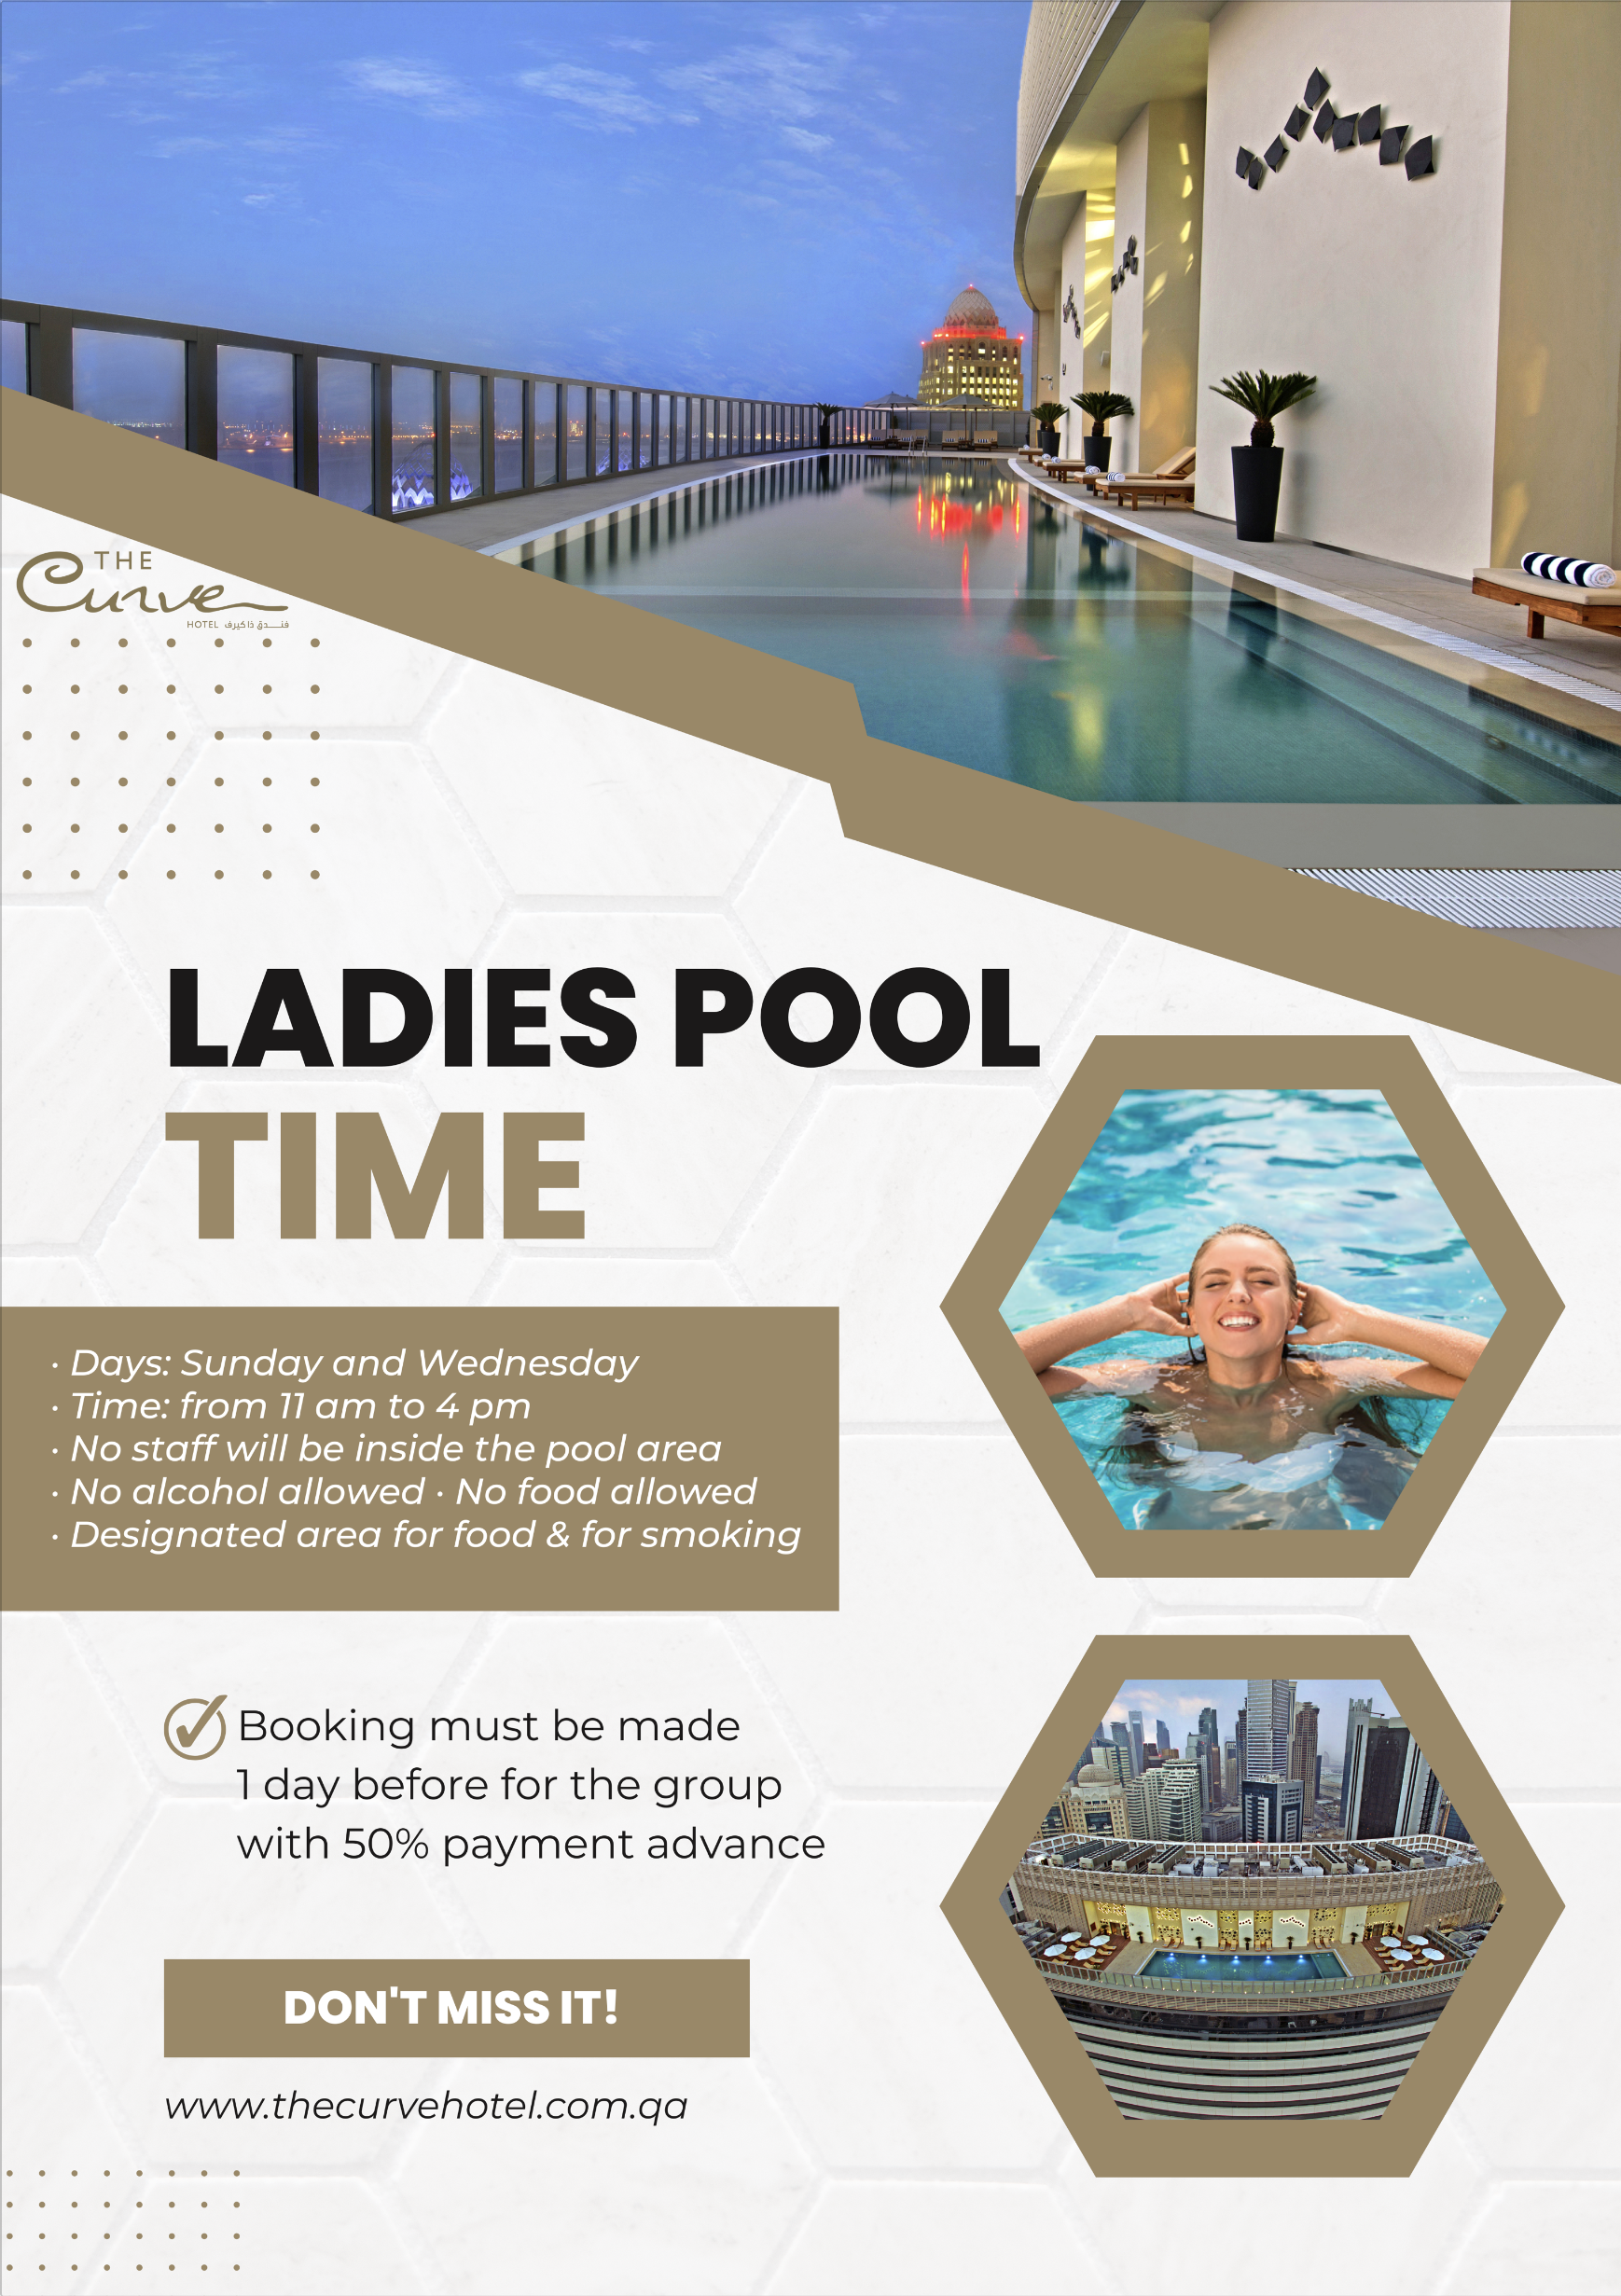 Ladies Pool Access